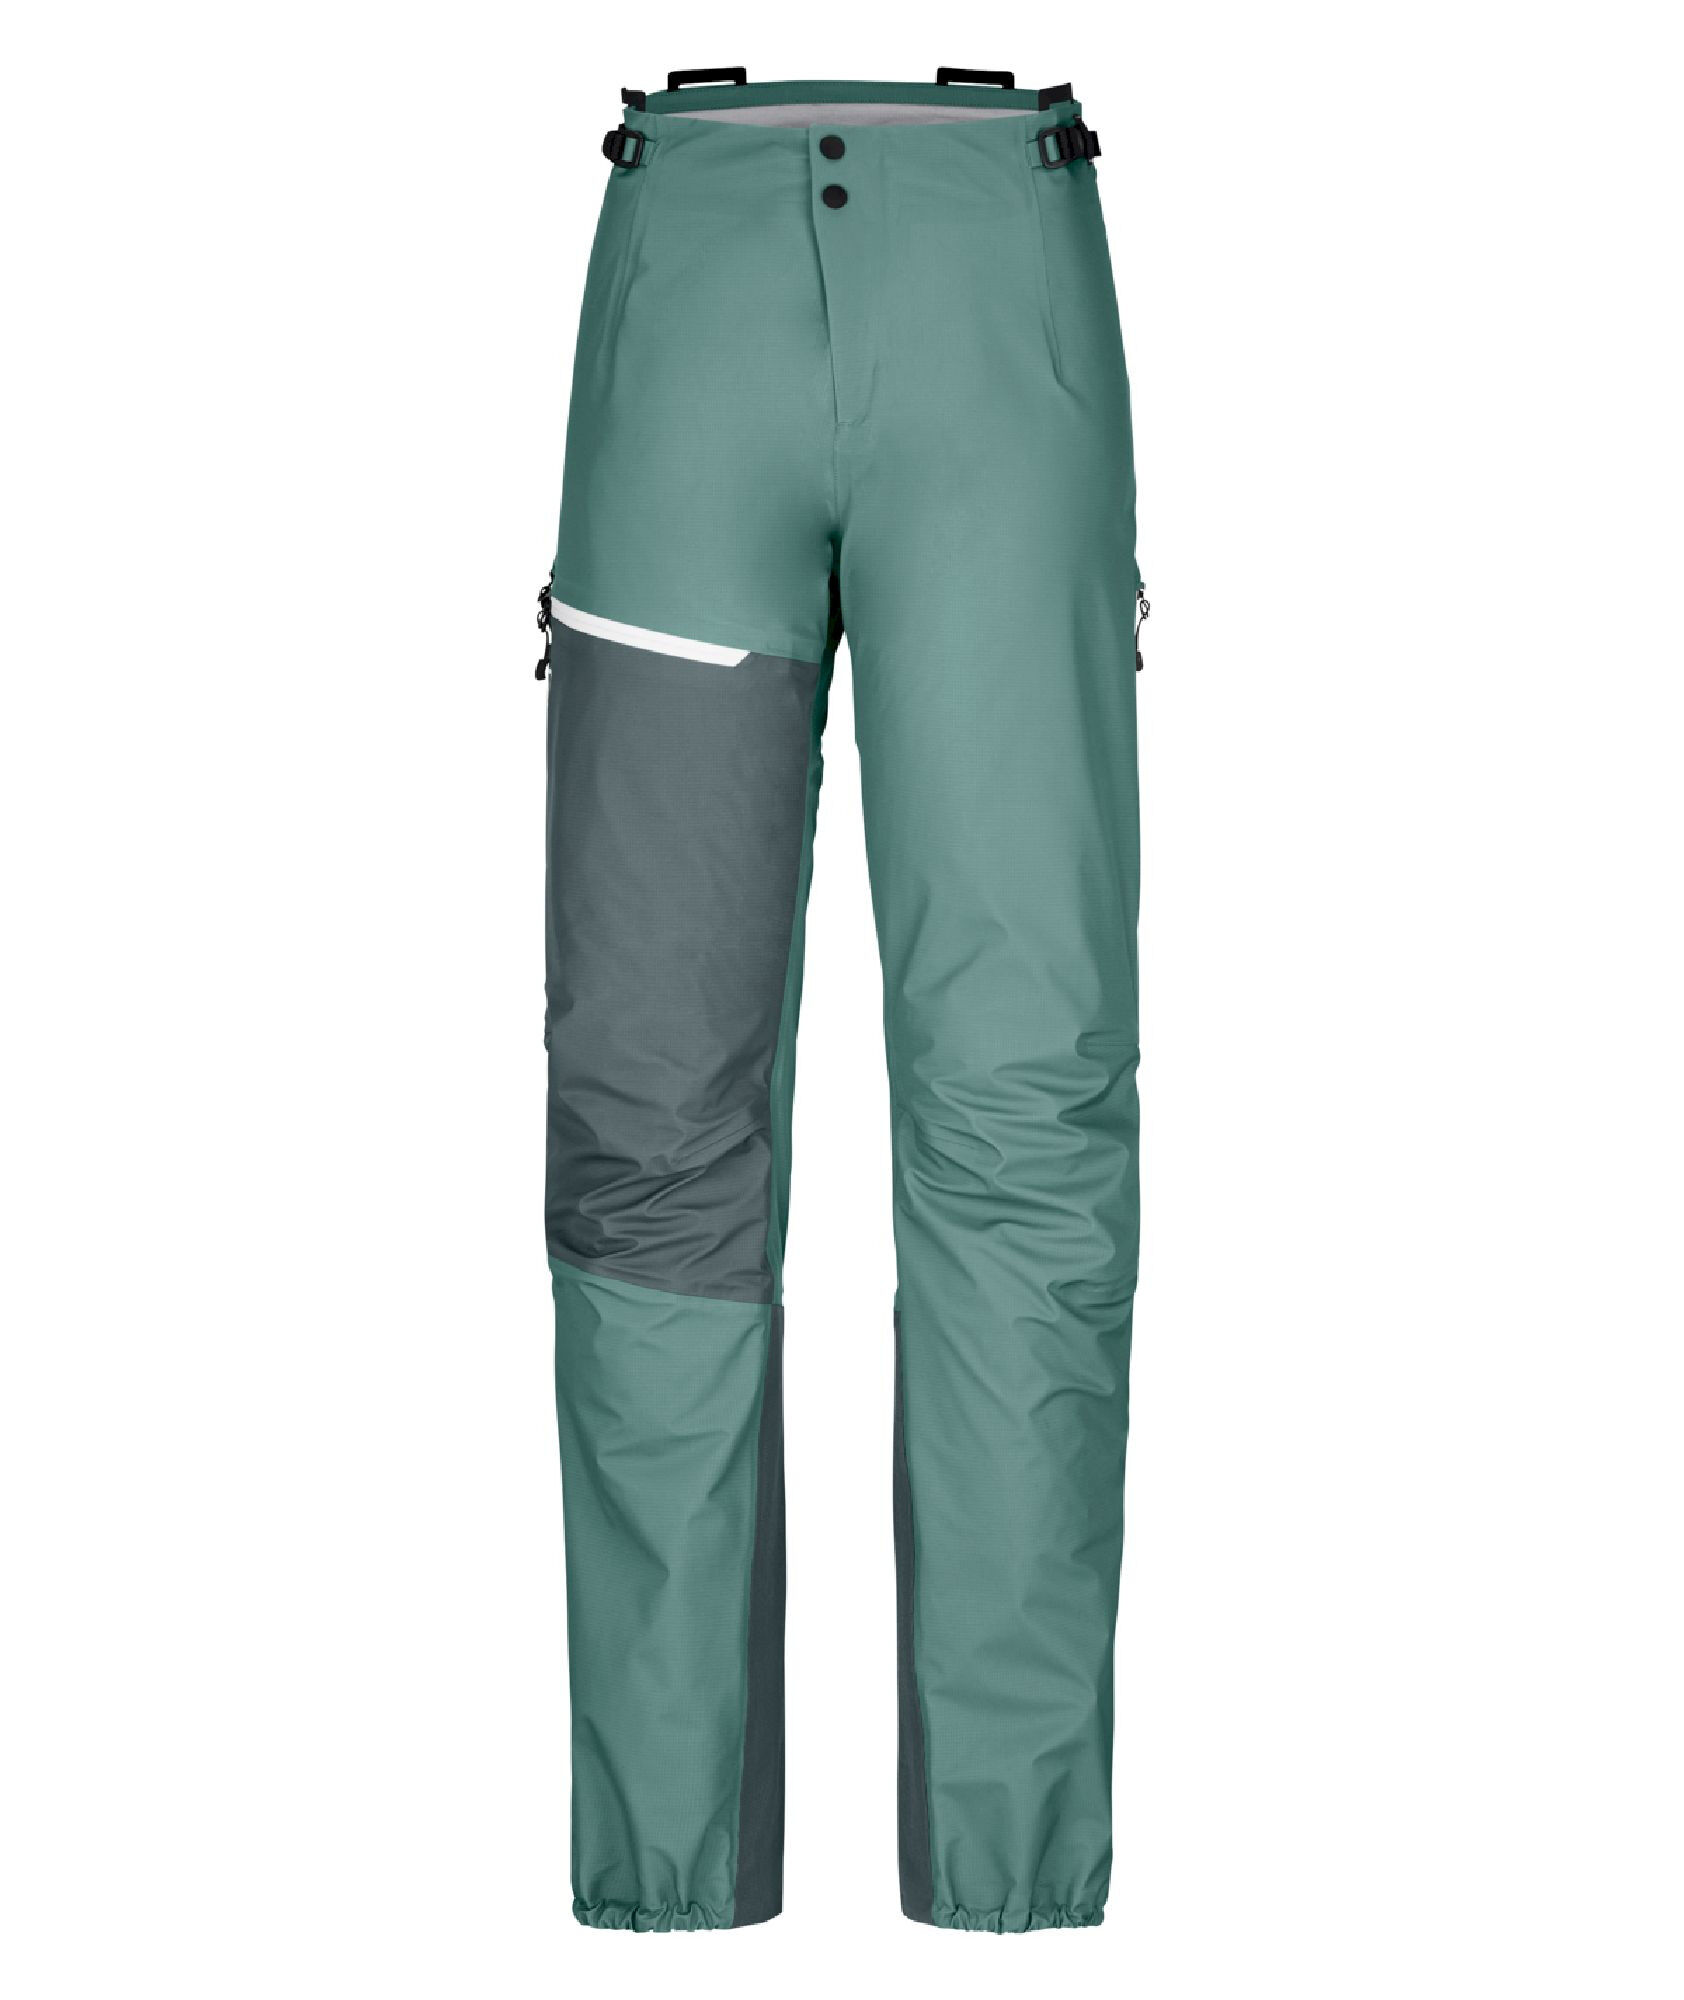 Ortovox Westalpen 3L Light Pants - Hardshell pants - Women's